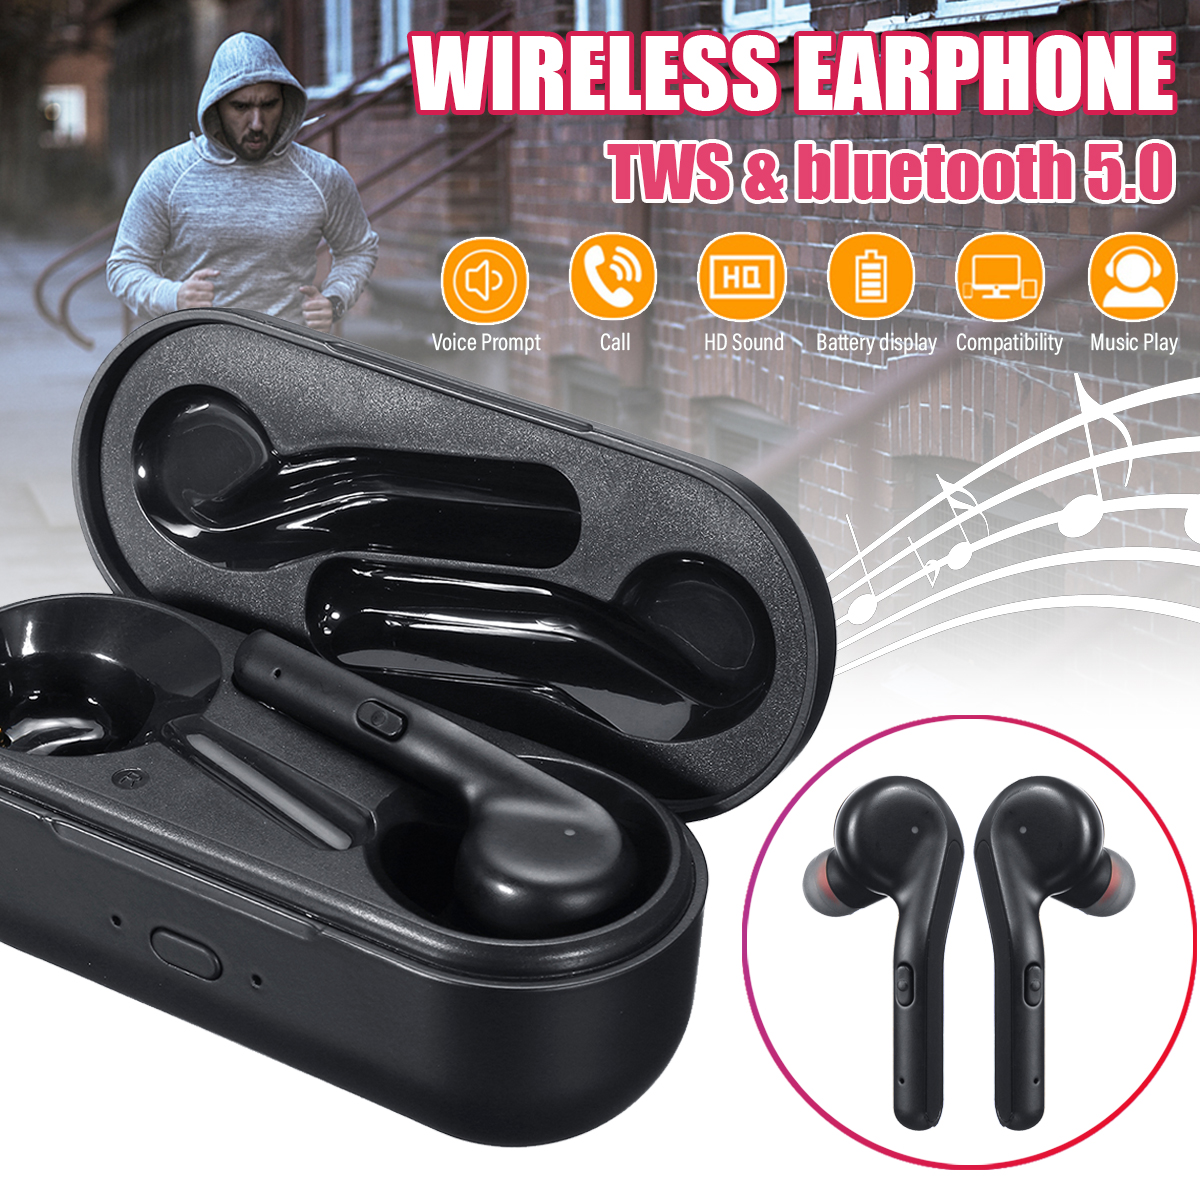 Portable-TWS-Wireless-bluetooth-50-Earphone-Heavy-Bass-Stereo-Bilateral-Calls-Headphone-with-Chargin-1441315-2